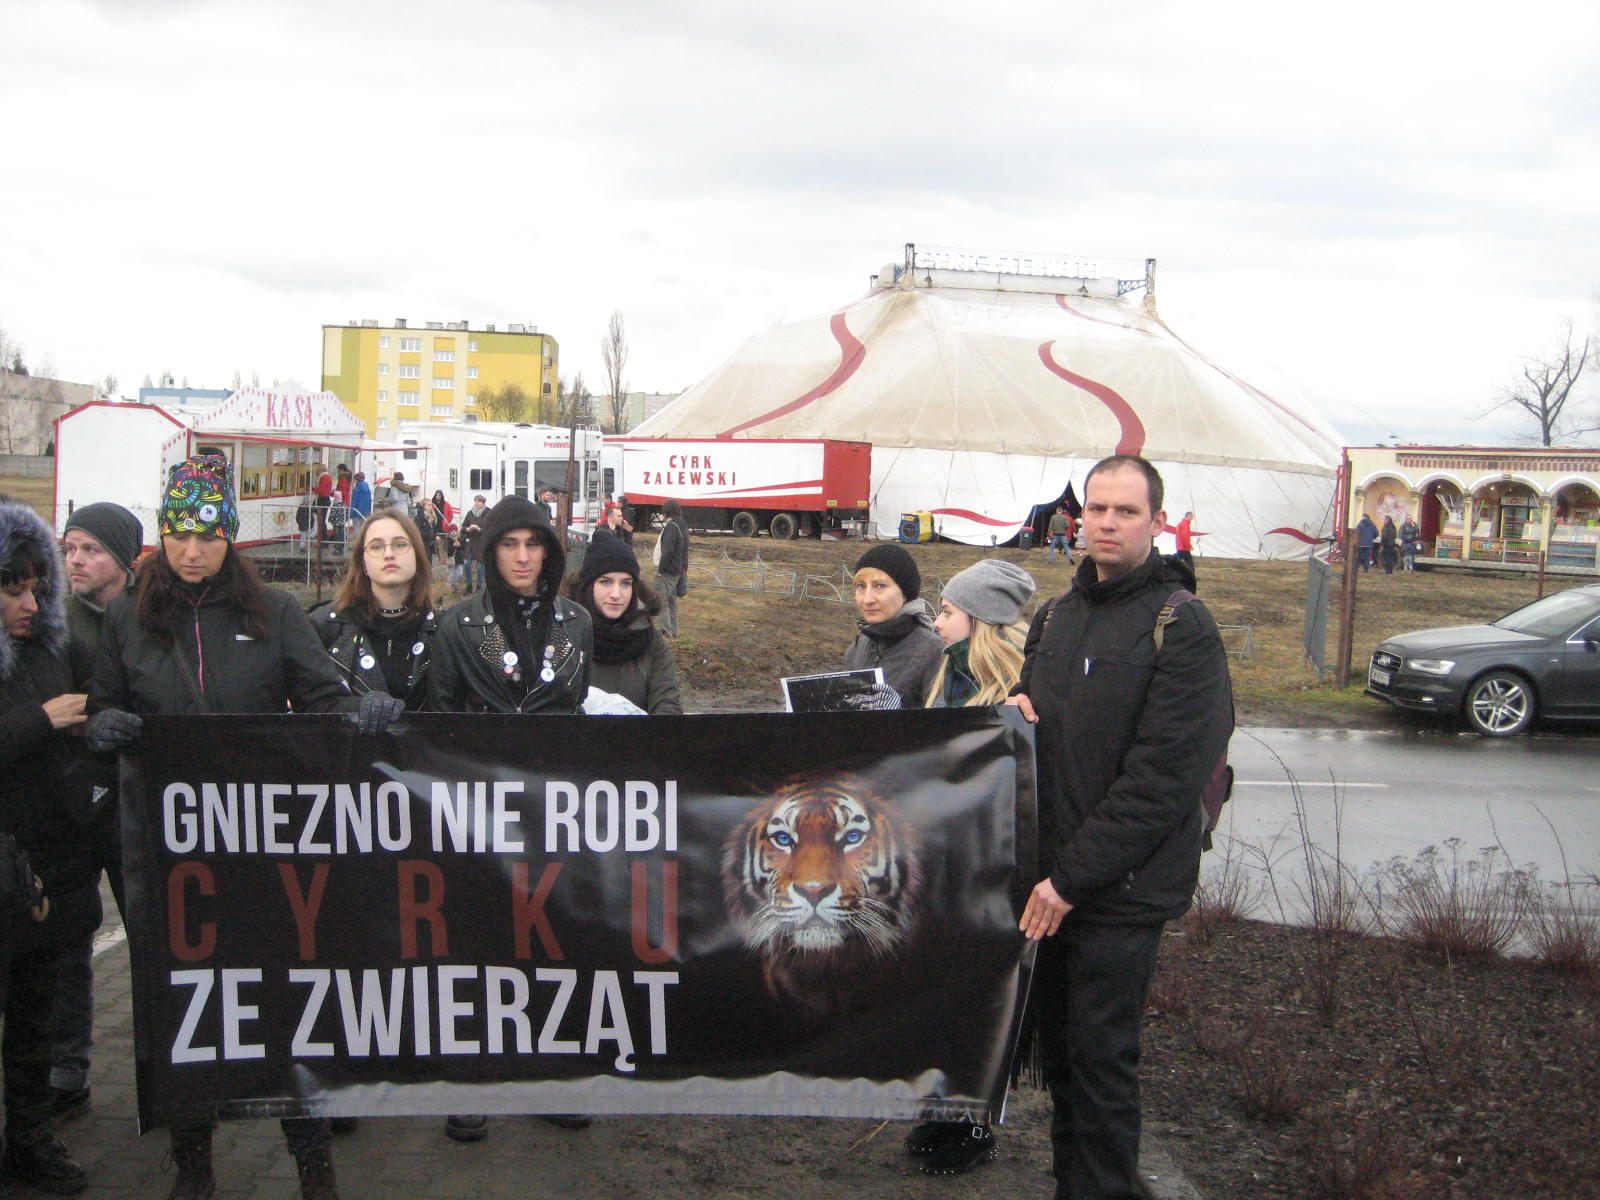 cyrk protest Gniezno - Rafał Muniak